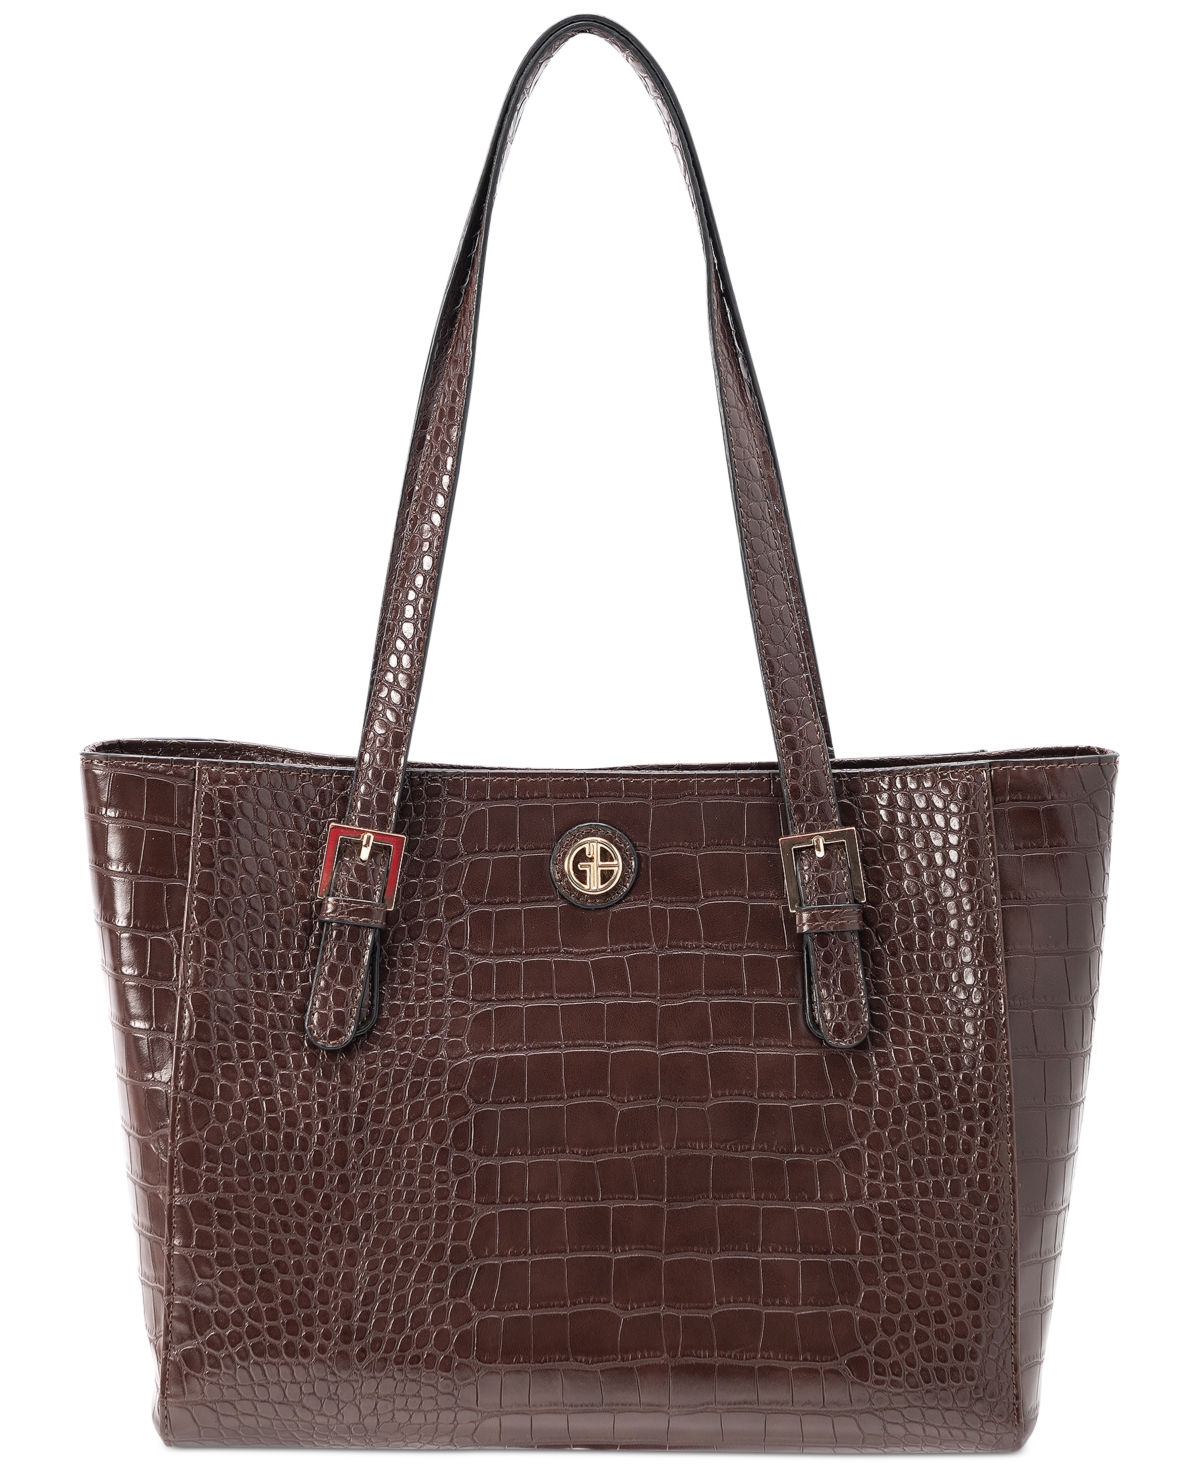 Macy's Citrus Park - New Giani Bernini handbags make a great Mother's Day  gift. ♥️